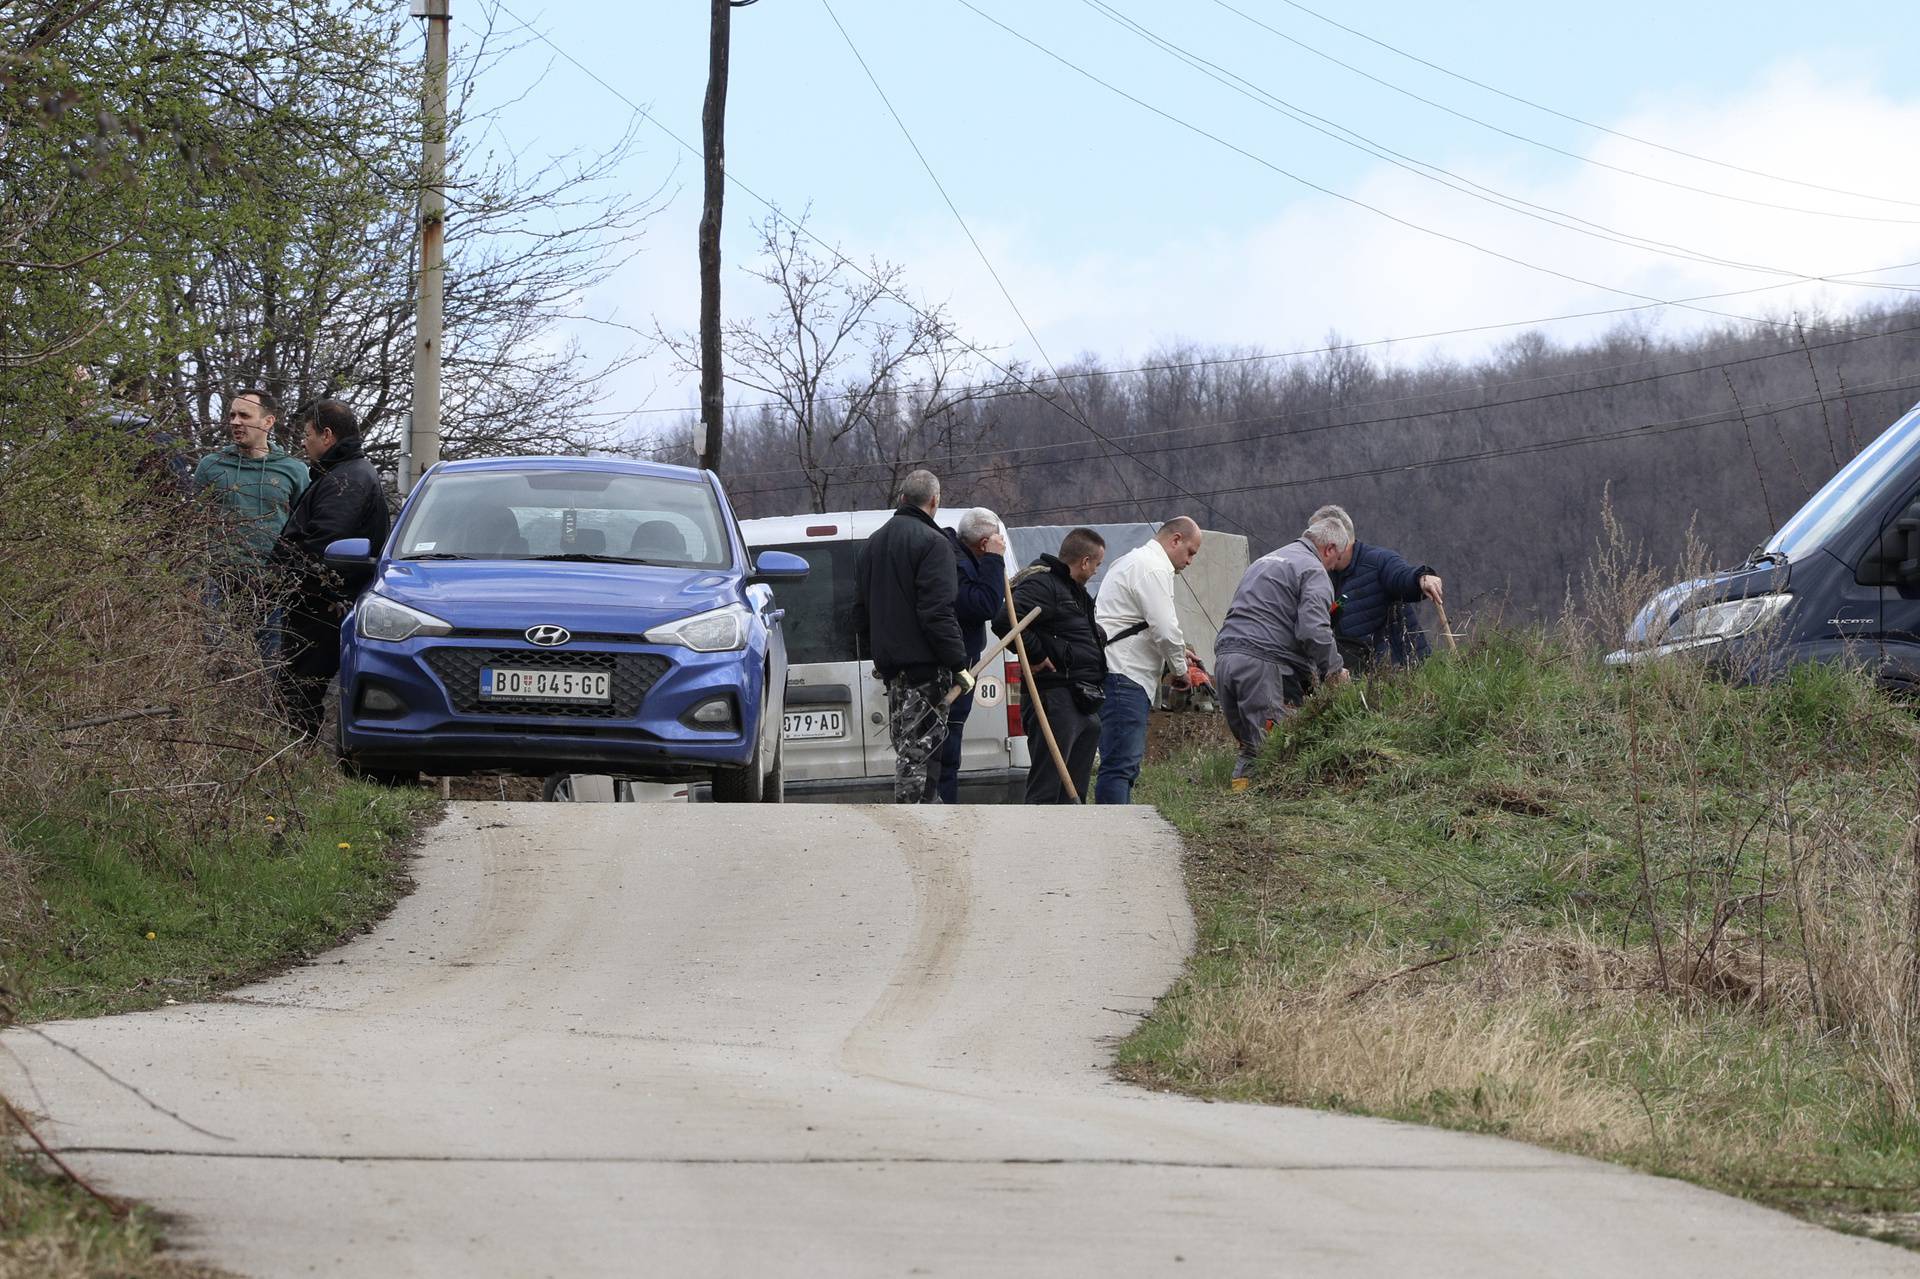 Srbija: Treći dan potrage za nestalom djevojčicom Dankom, policija kopa teren, stigao i bager